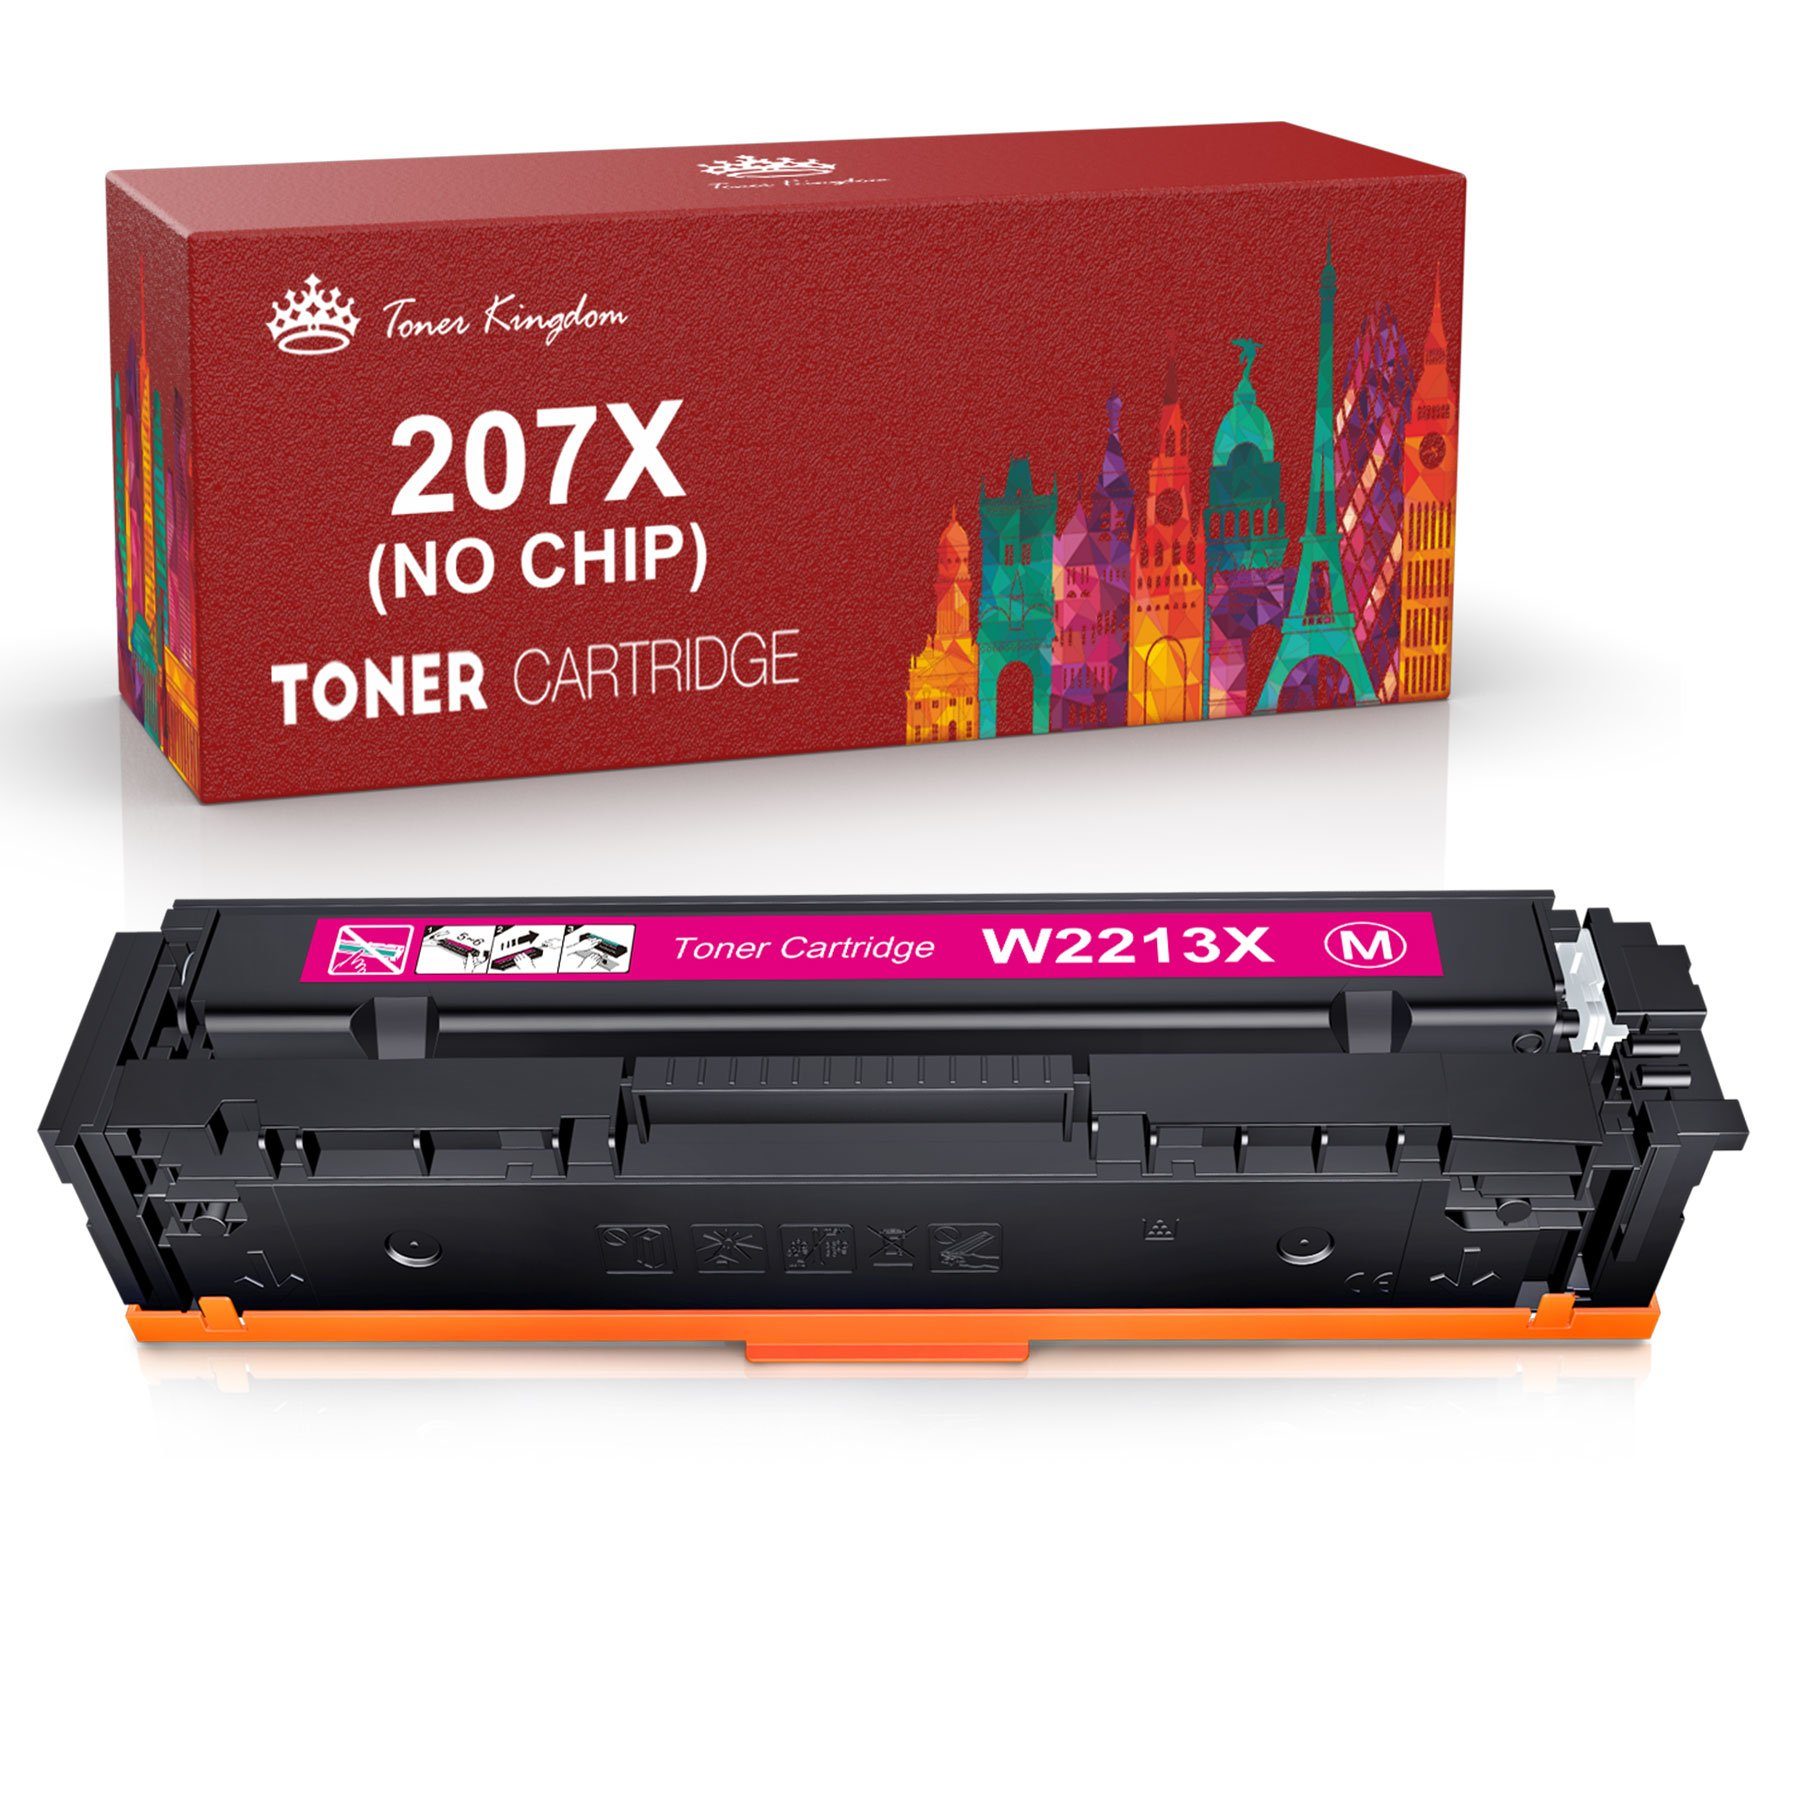 Toner Kingdom Tonerpatrone Ohne Chip für HP 207X 207A W2210X W2211X W2212X W2213X, Color Laserjet Pro MFP M283fdw M282nw M283fdn M255dw M255nw 207X Magenta | Tonerpatronen